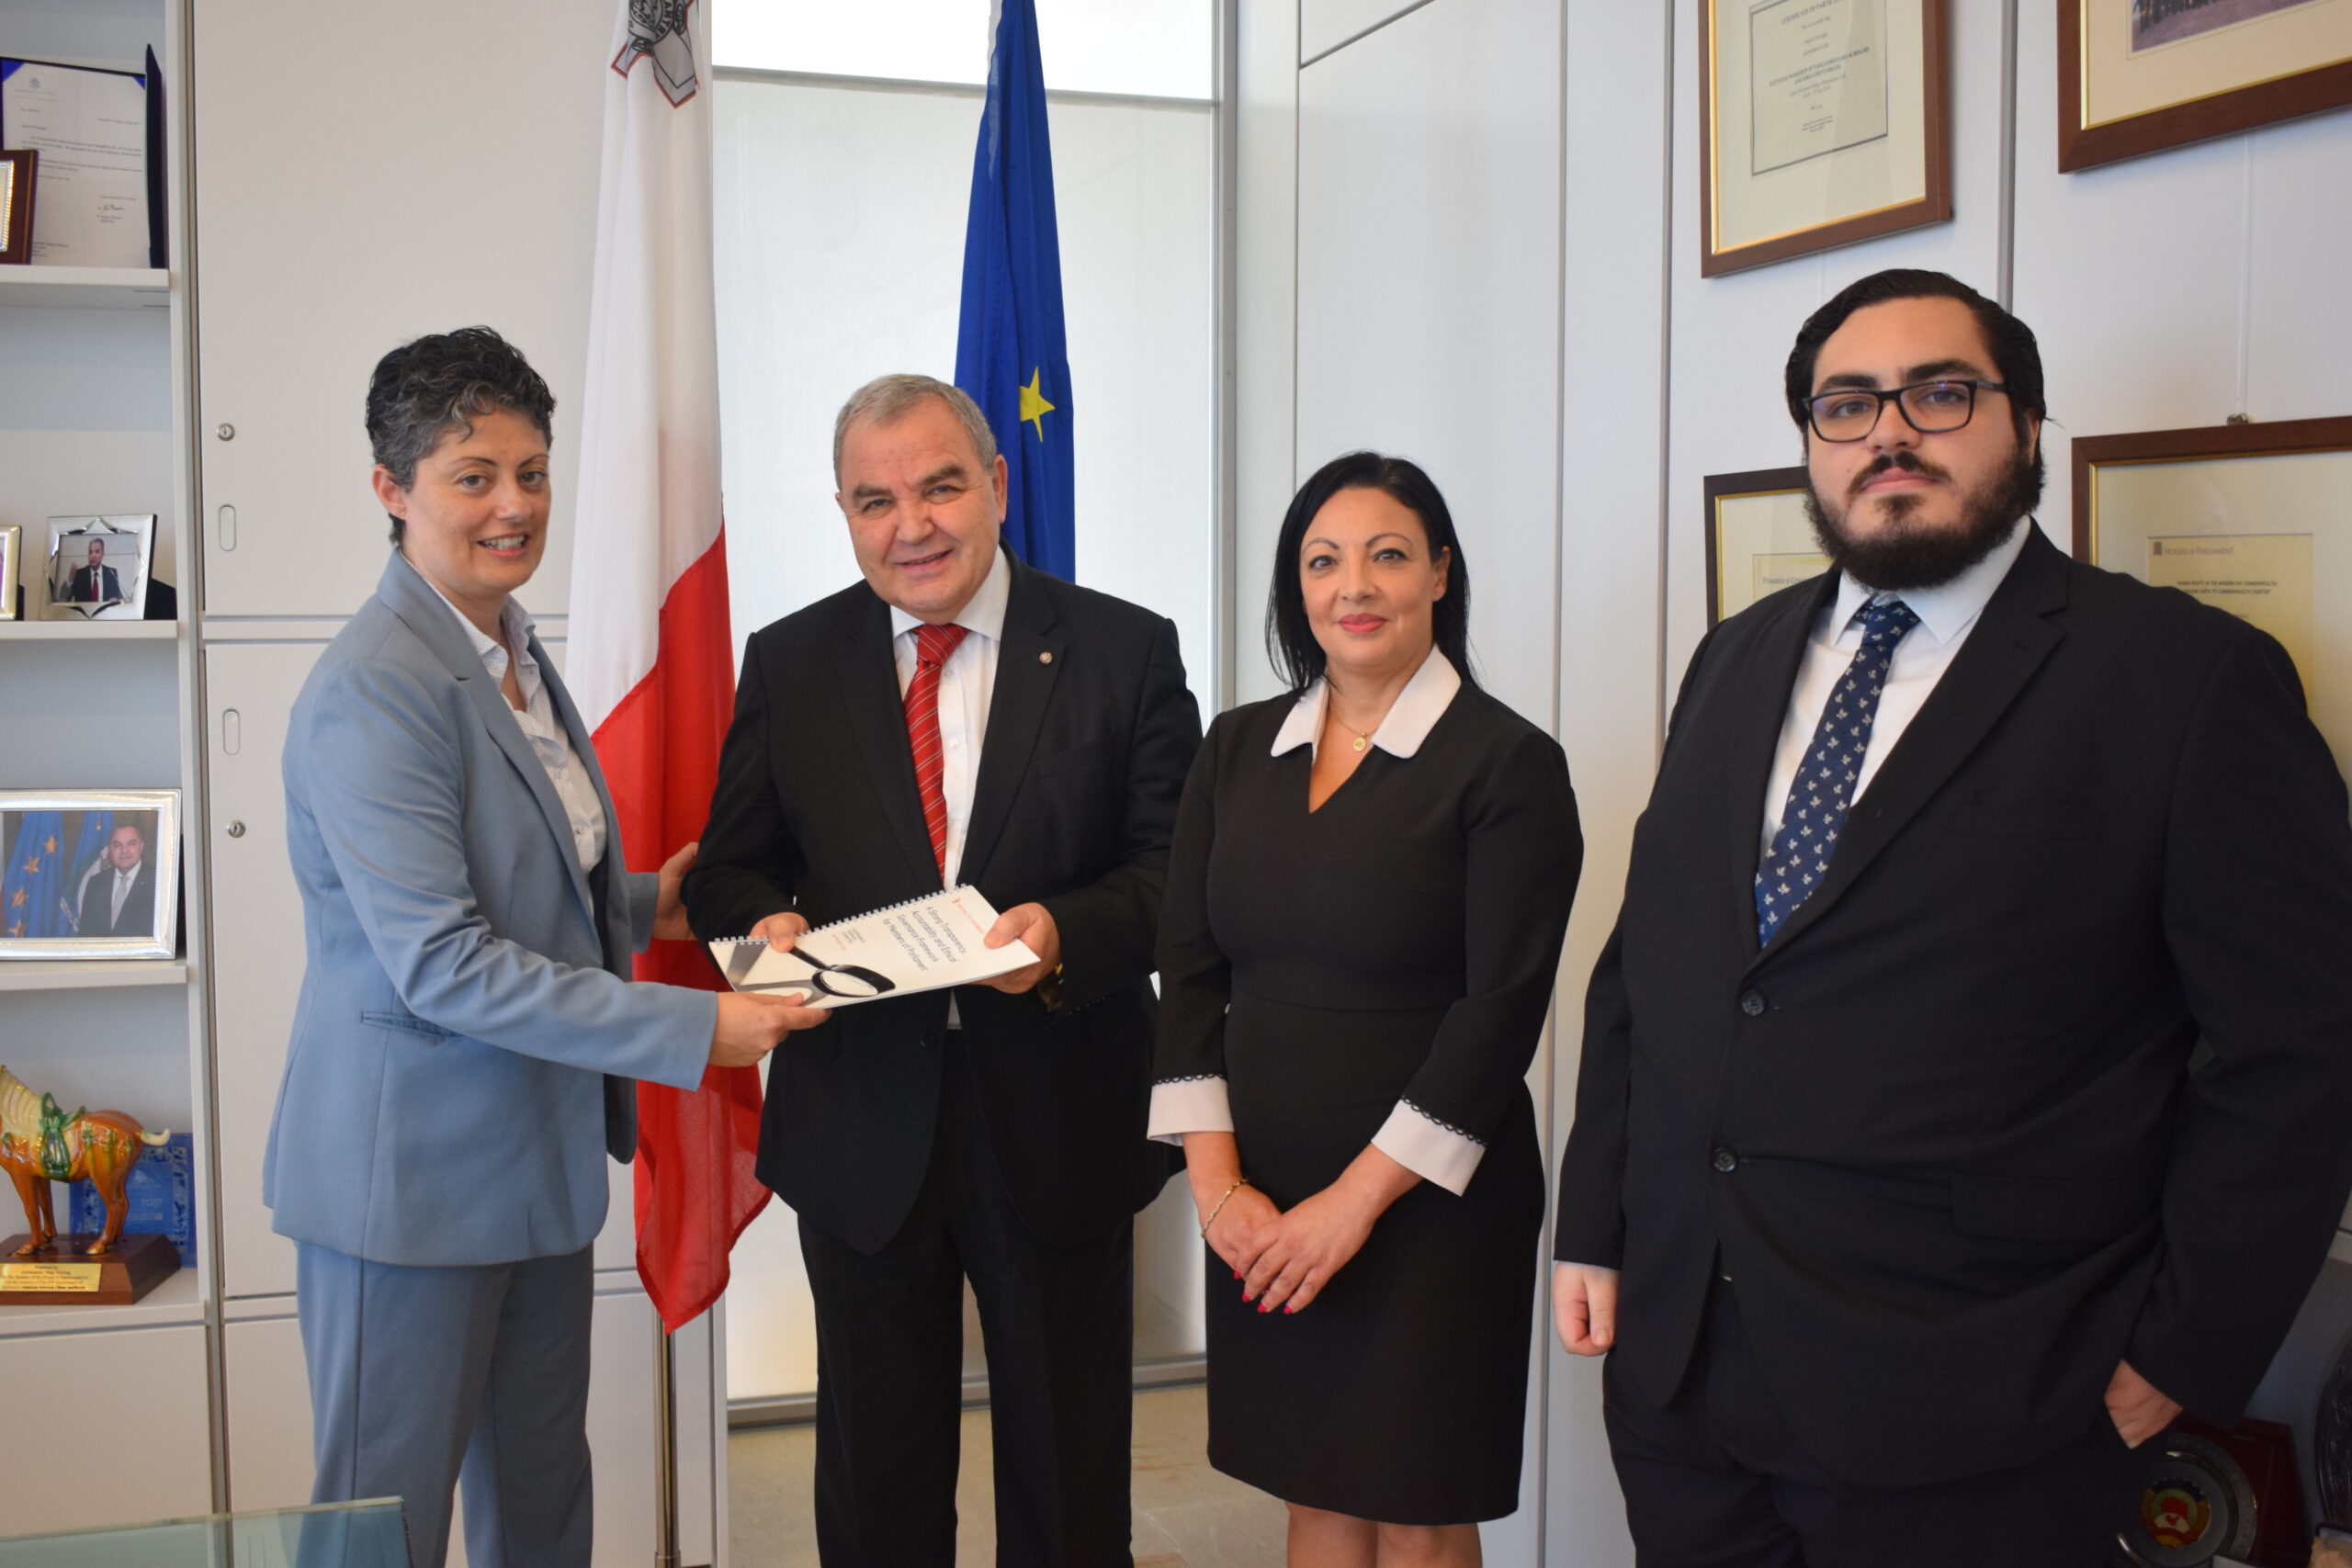 The Malta Chamber presents good governance document to the Speaker